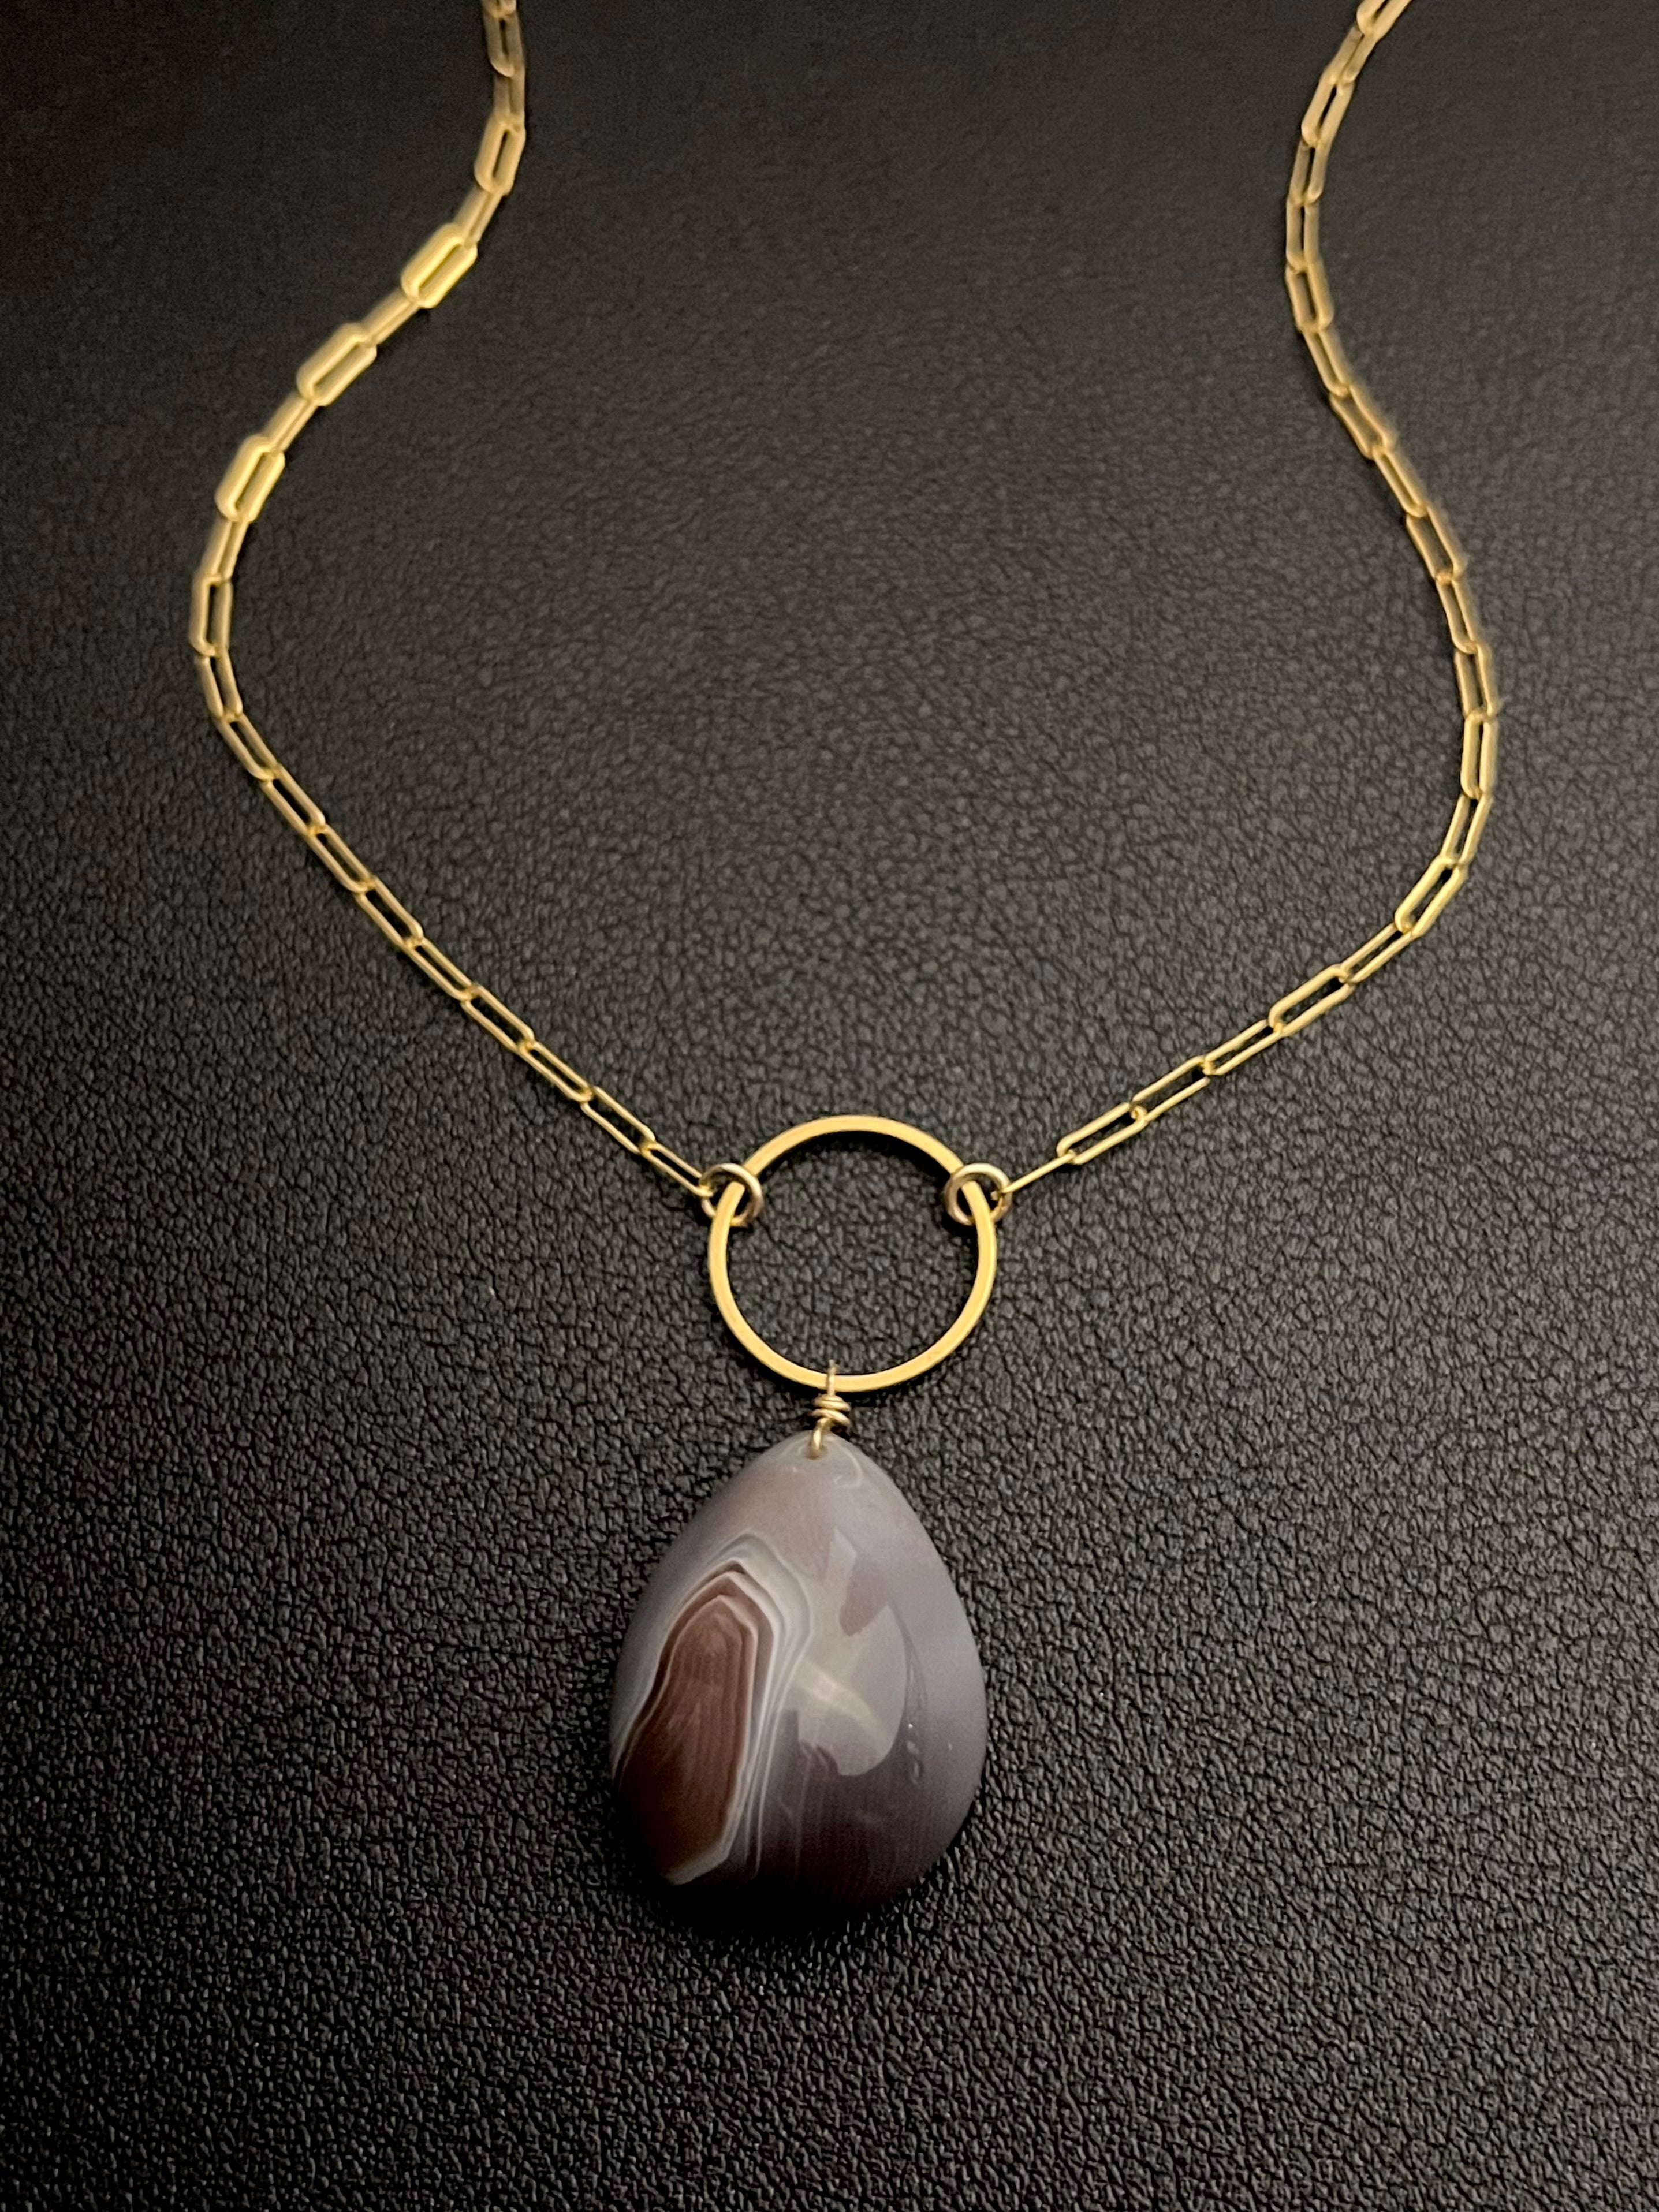 •LUNA• botswana agate + gold necklace (16"-18")